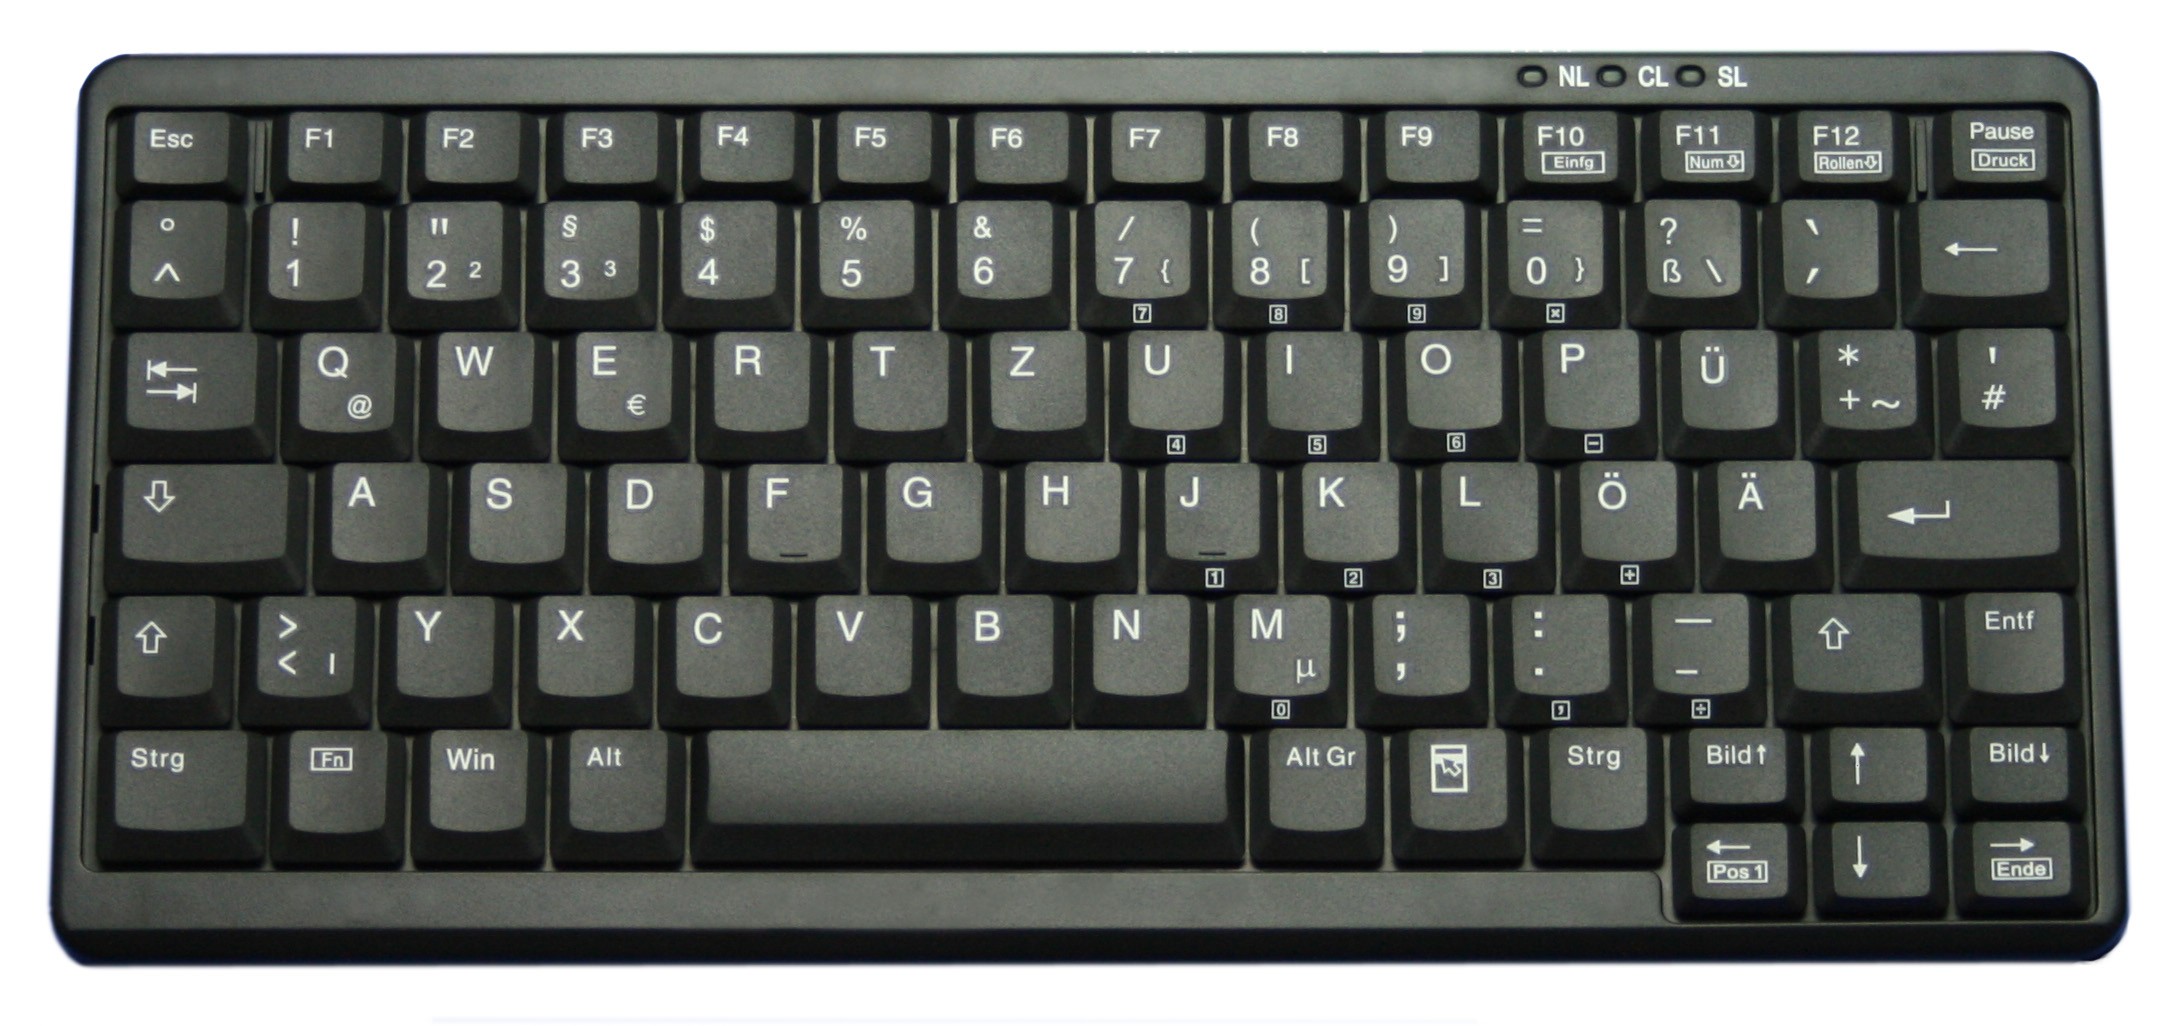 Industry 4.0 Mini Notebook Style Keyboard PS2 Black, Spanish layout